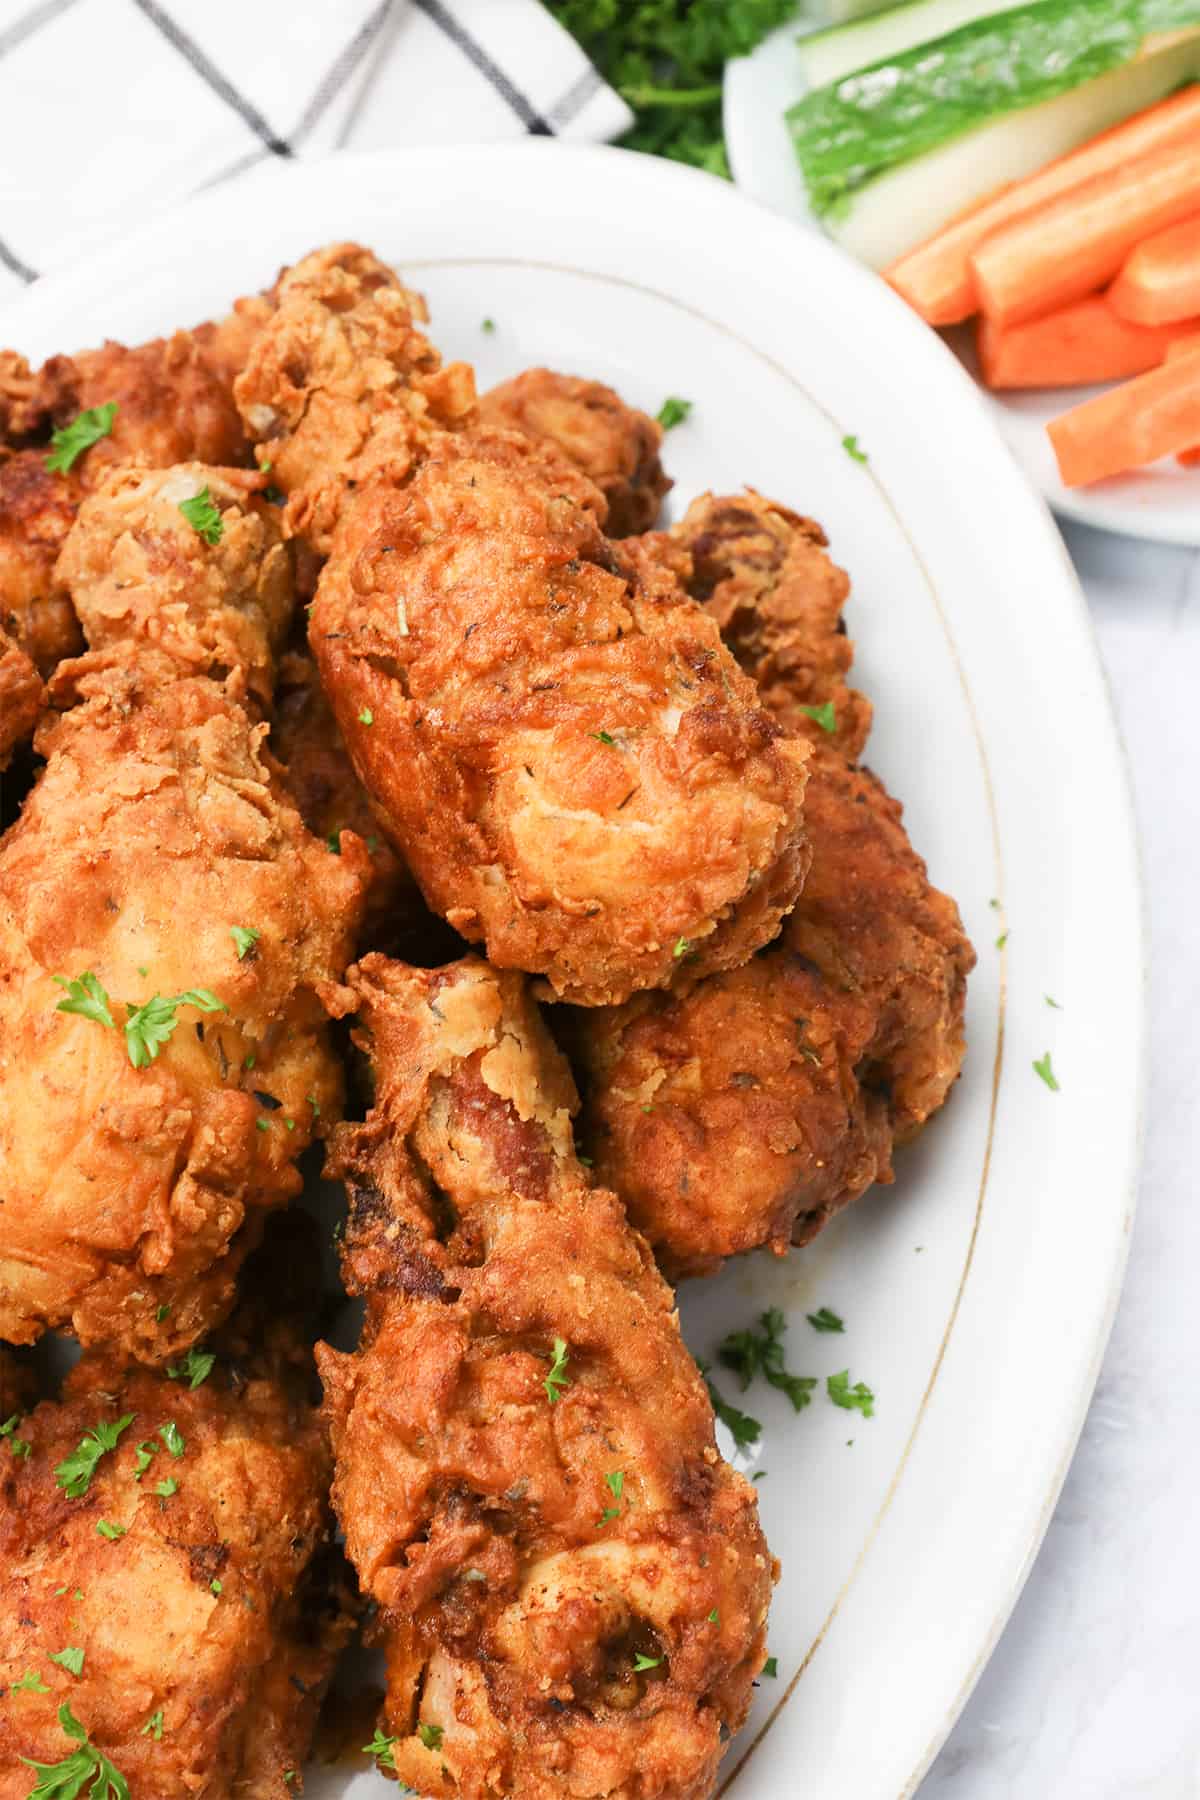 Deep Fried Chicken Legs with tender, flavorful meat. Irresistible comfort food